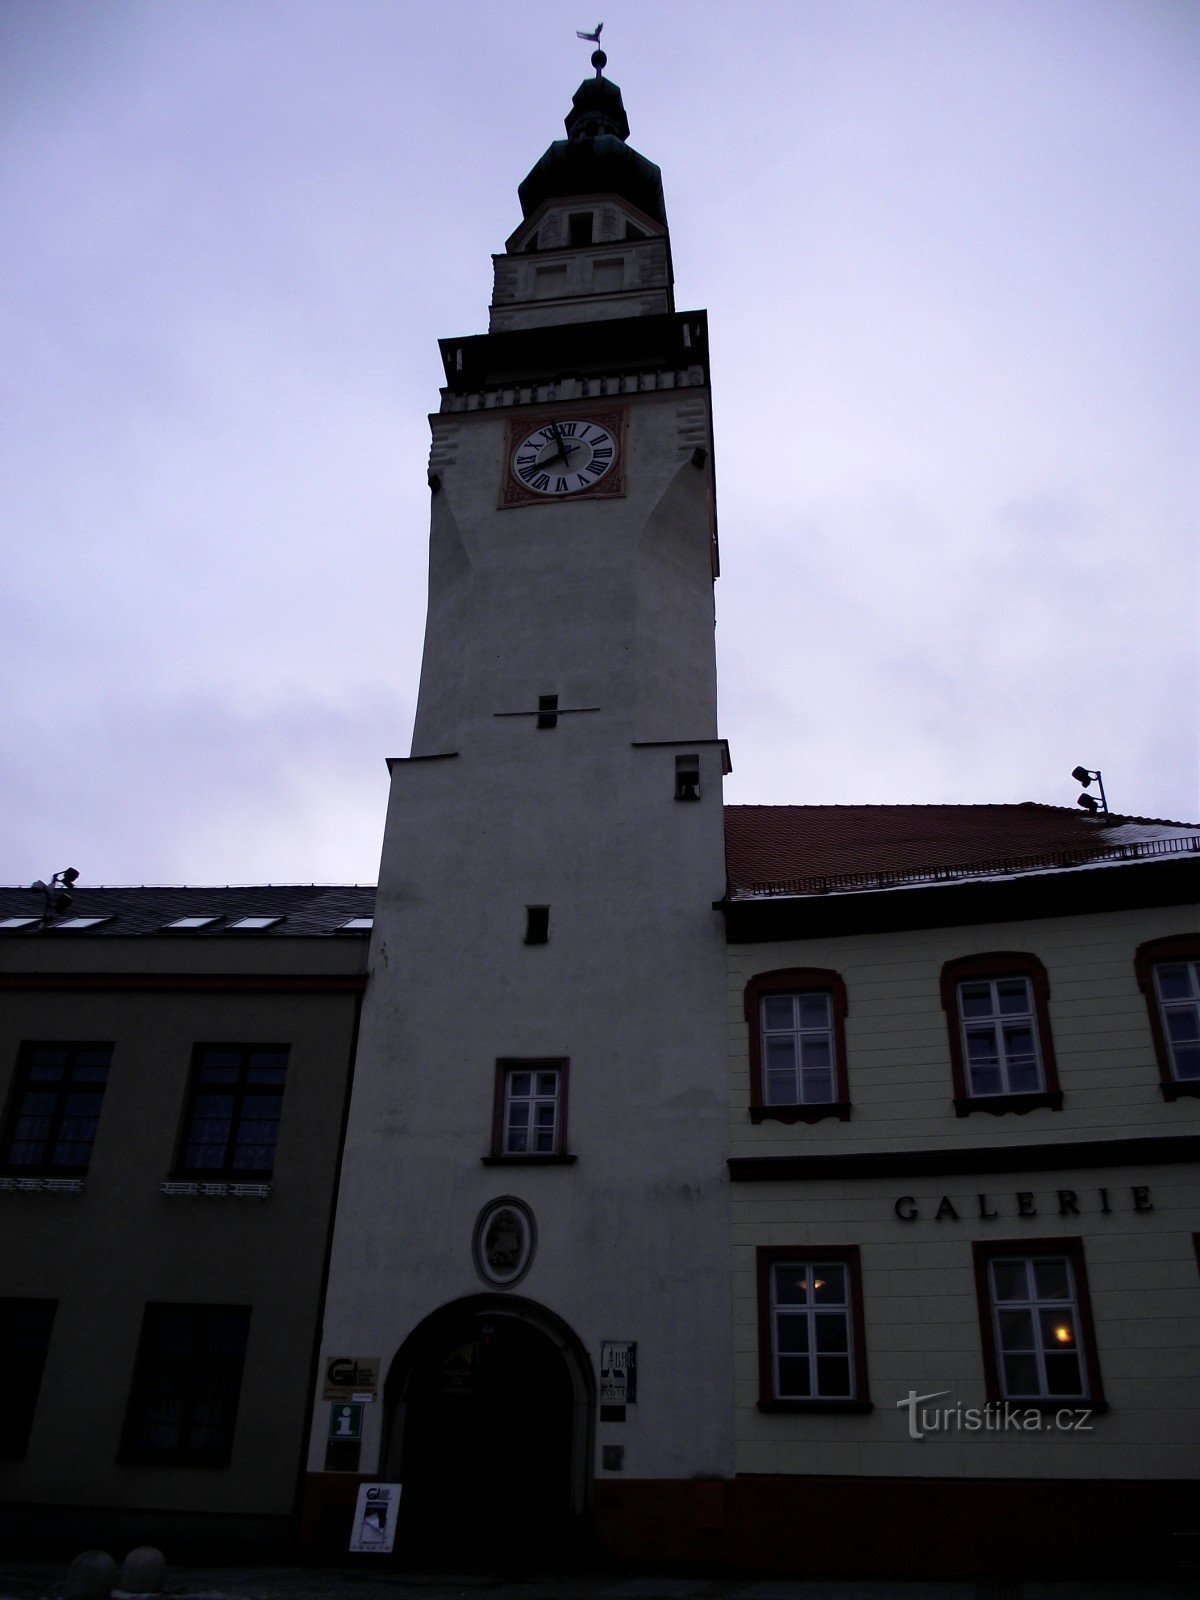 Rathausturm mit Glocke